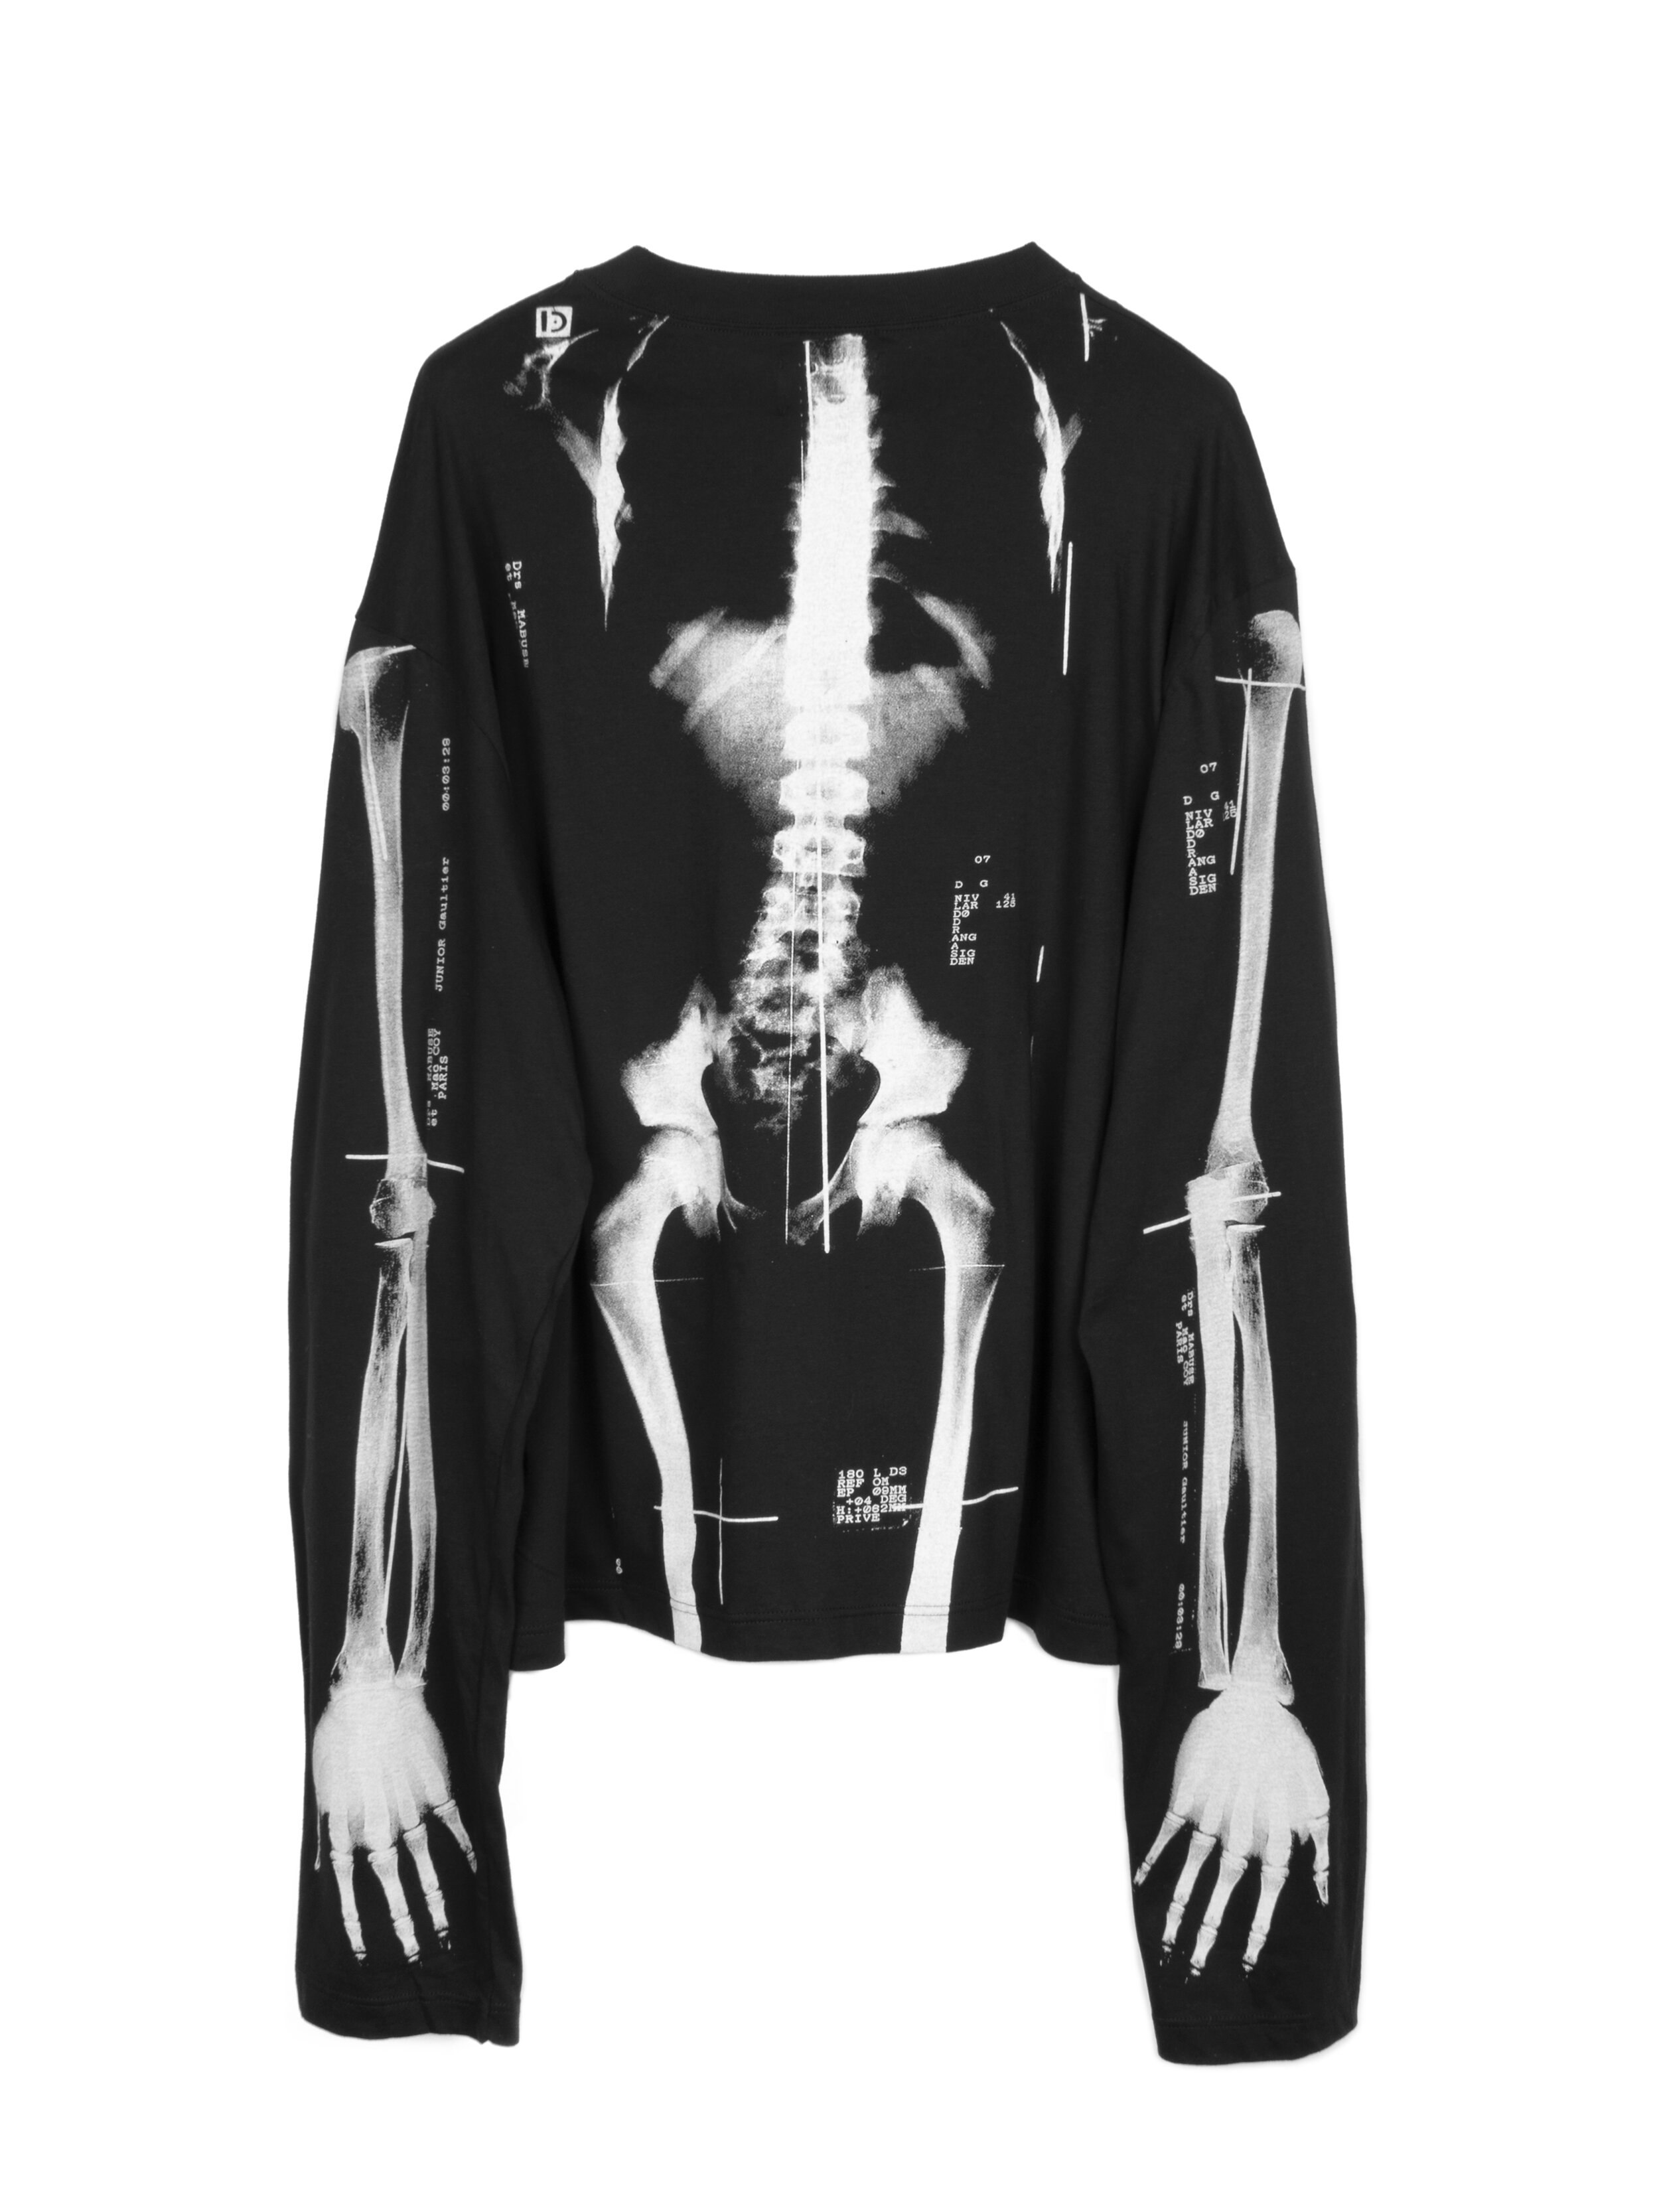 Jean Paul Gaultier SS1990 Skeleton Long Sleeve Shirt — Middleman Store